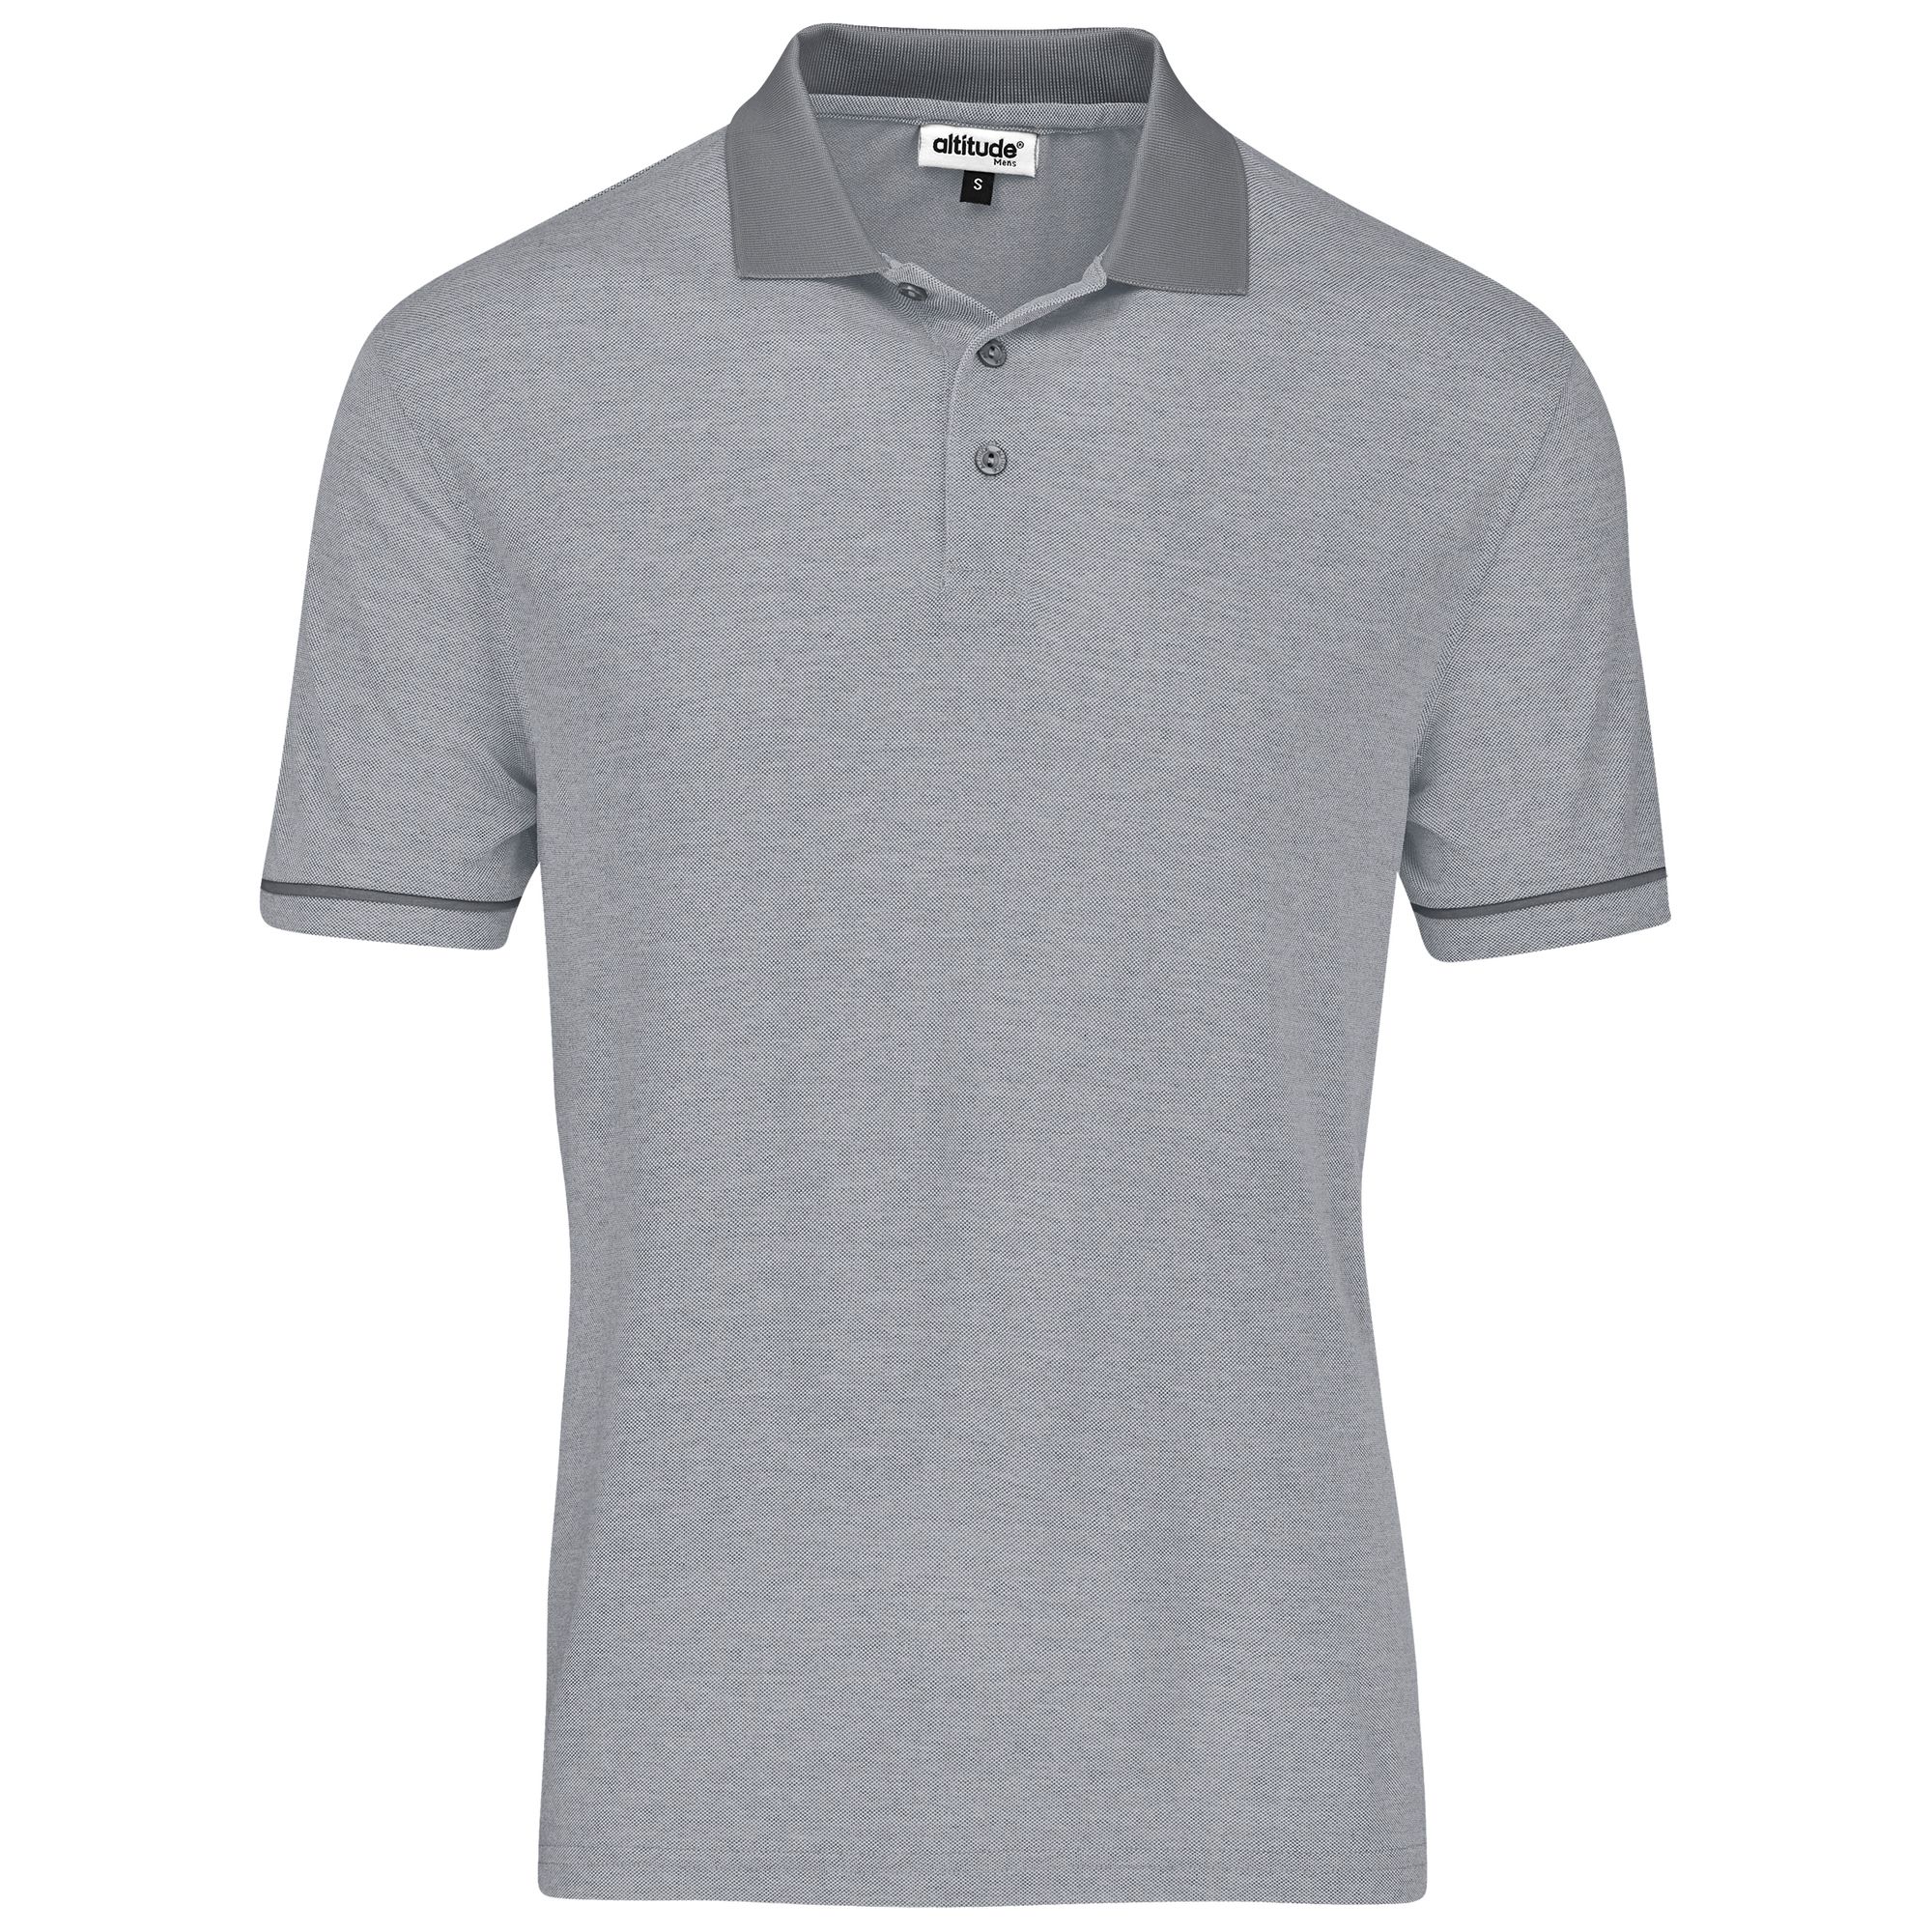 Mens Verge Golf Shirt - Light Grey | Brand Innovation